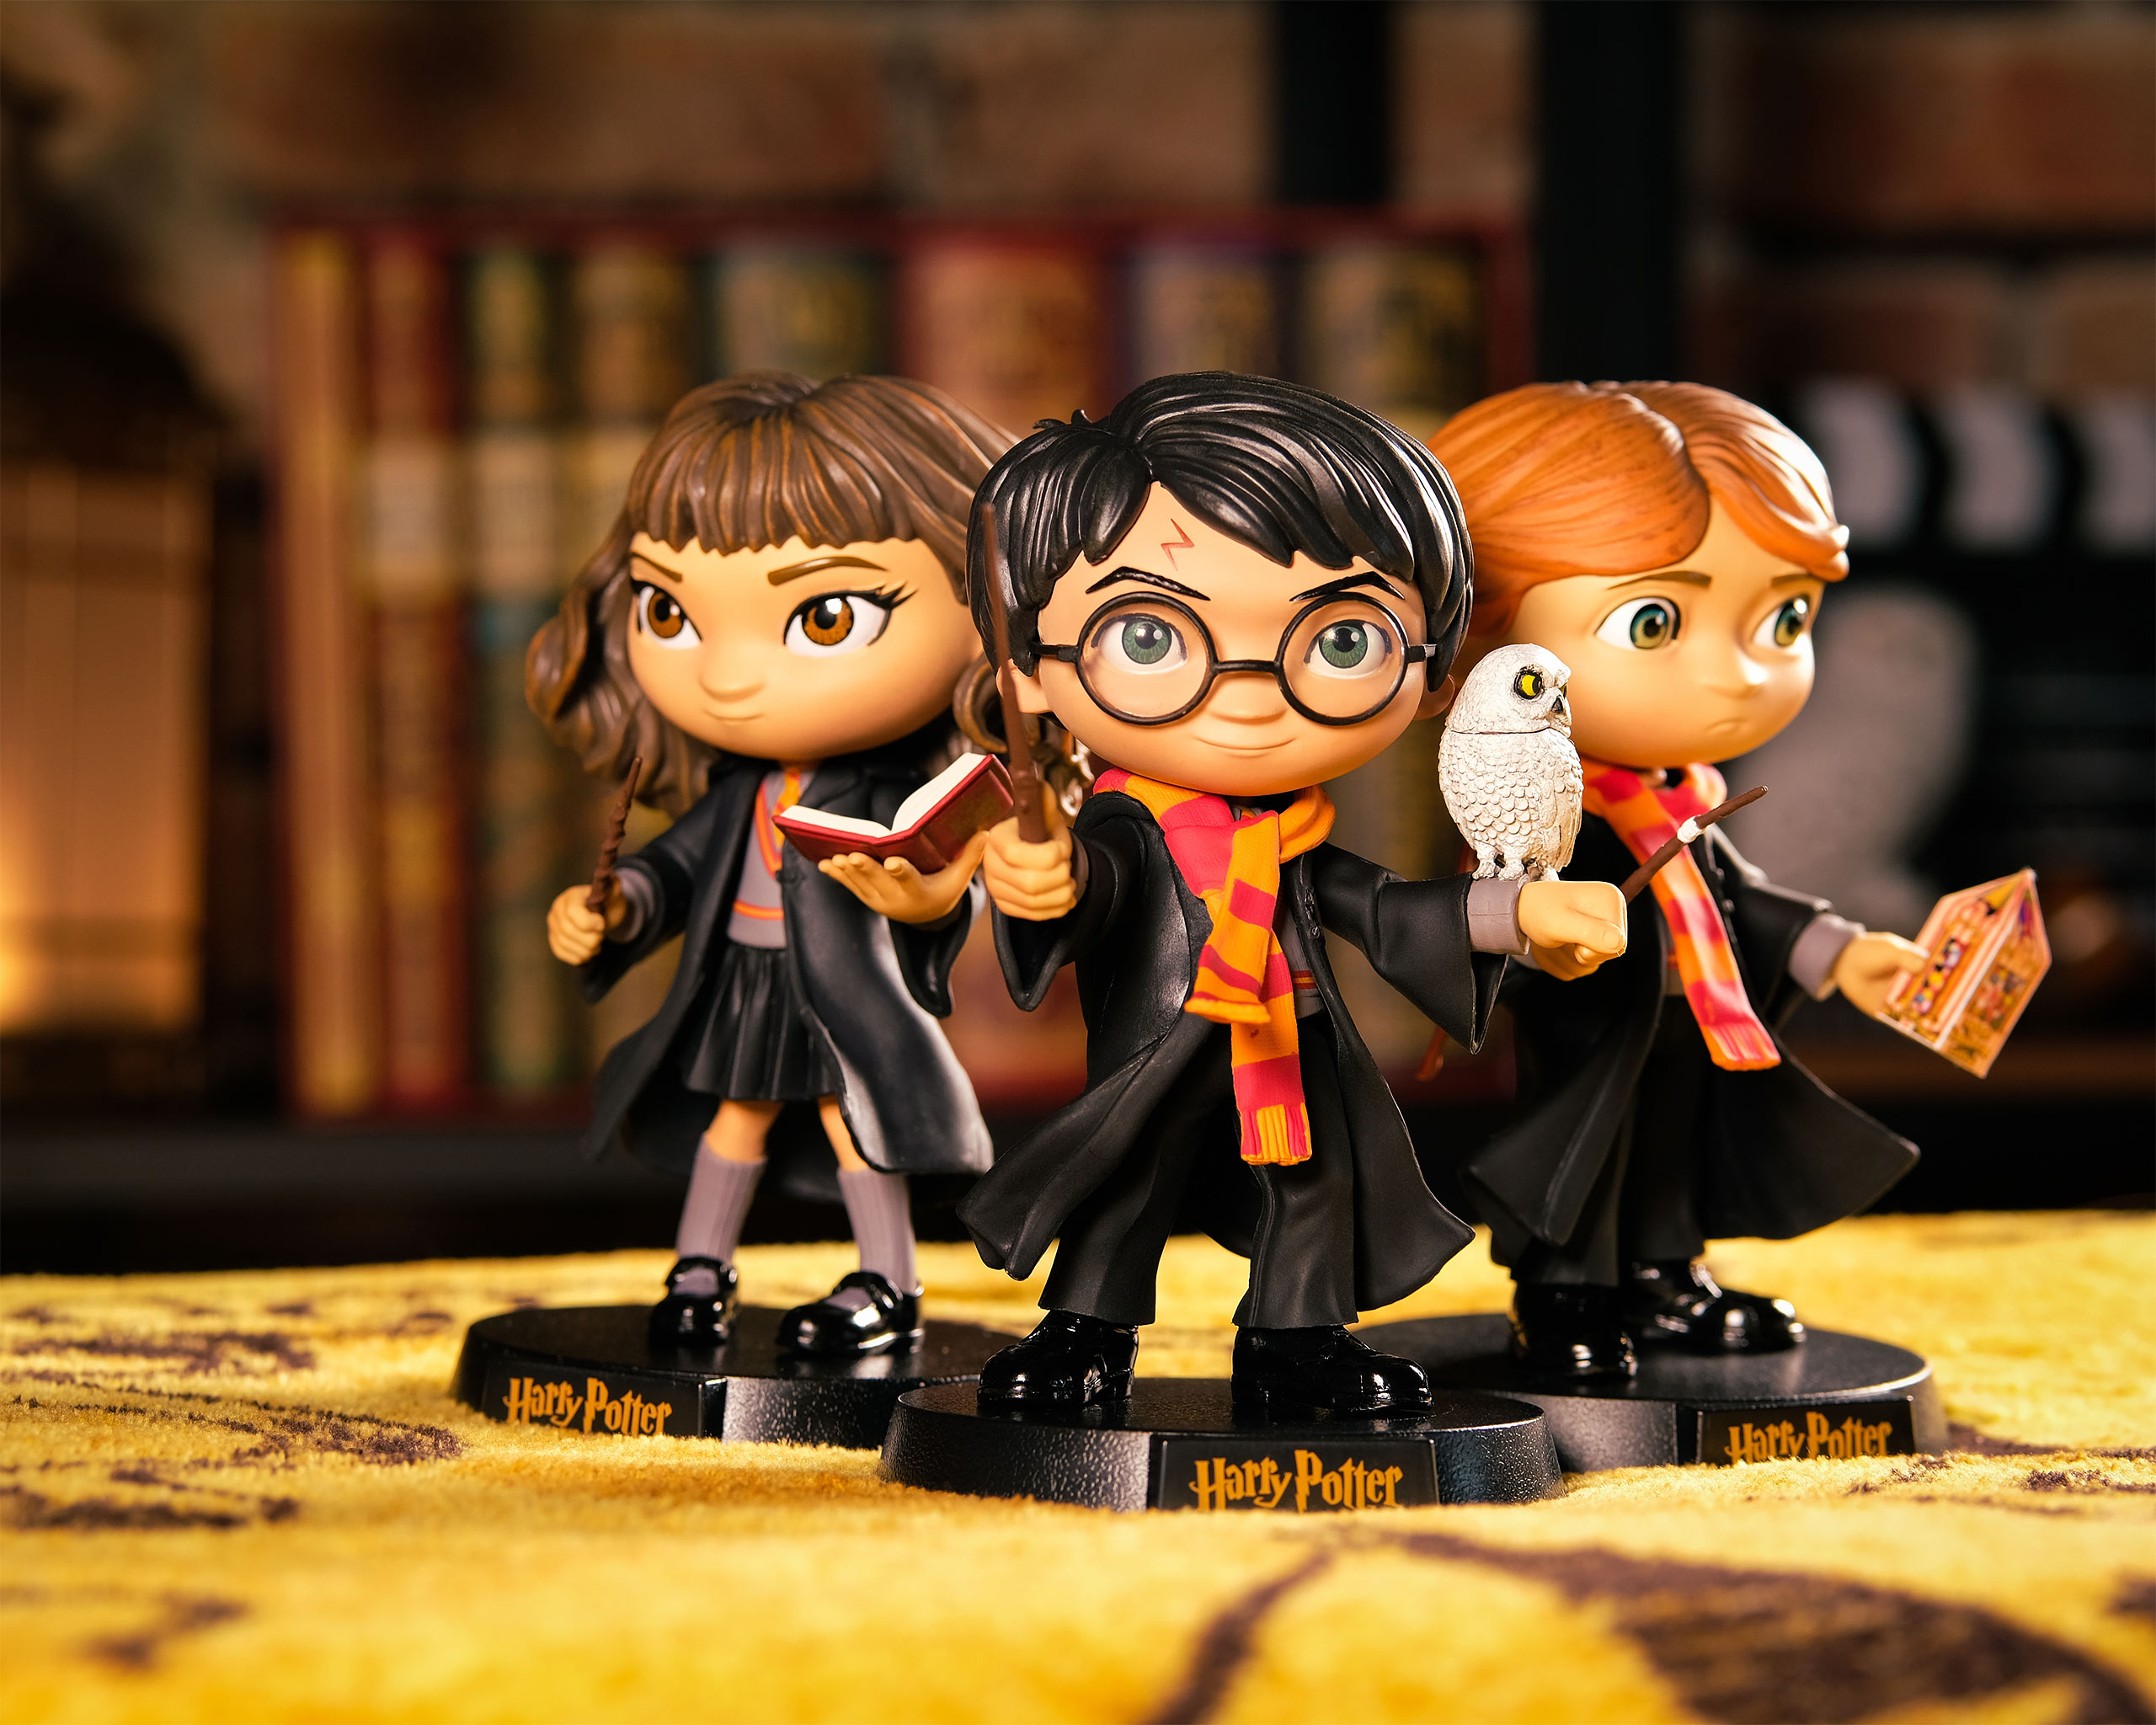 Harry Potter - Ron Minico figure